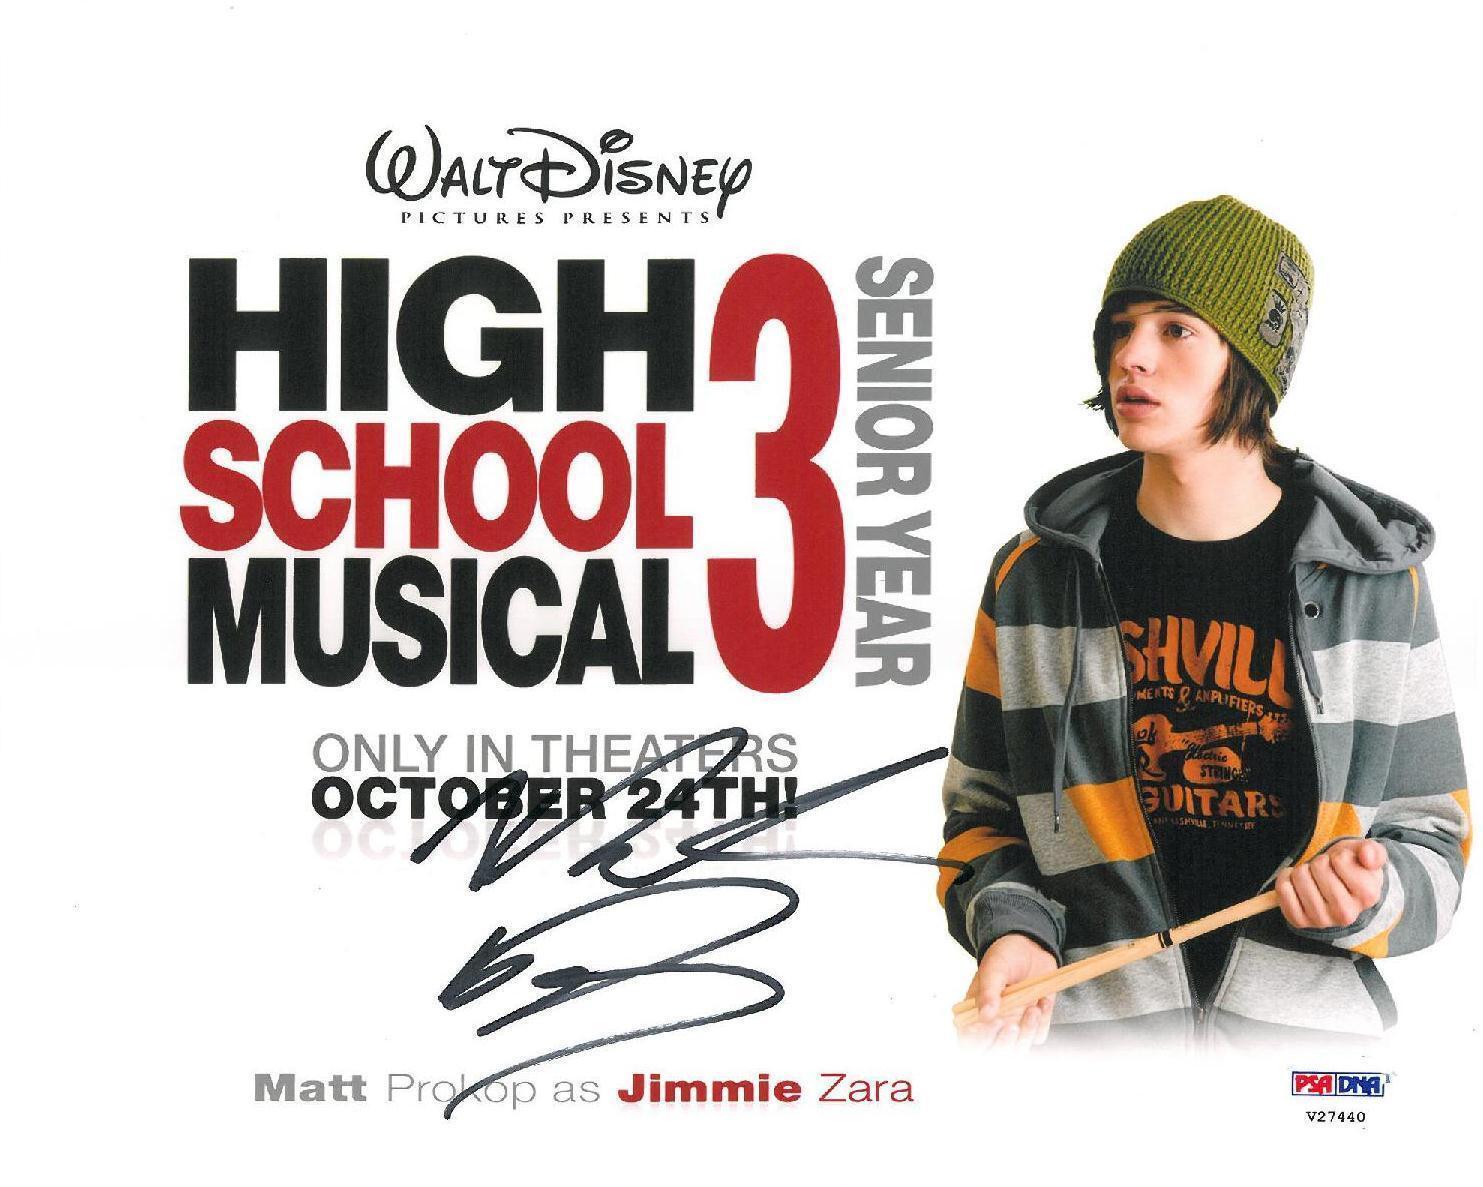 Matt Prokop Signed High School Musical 3 Autographed 8x10 Photo Poster painting PSA/DNA #V27440